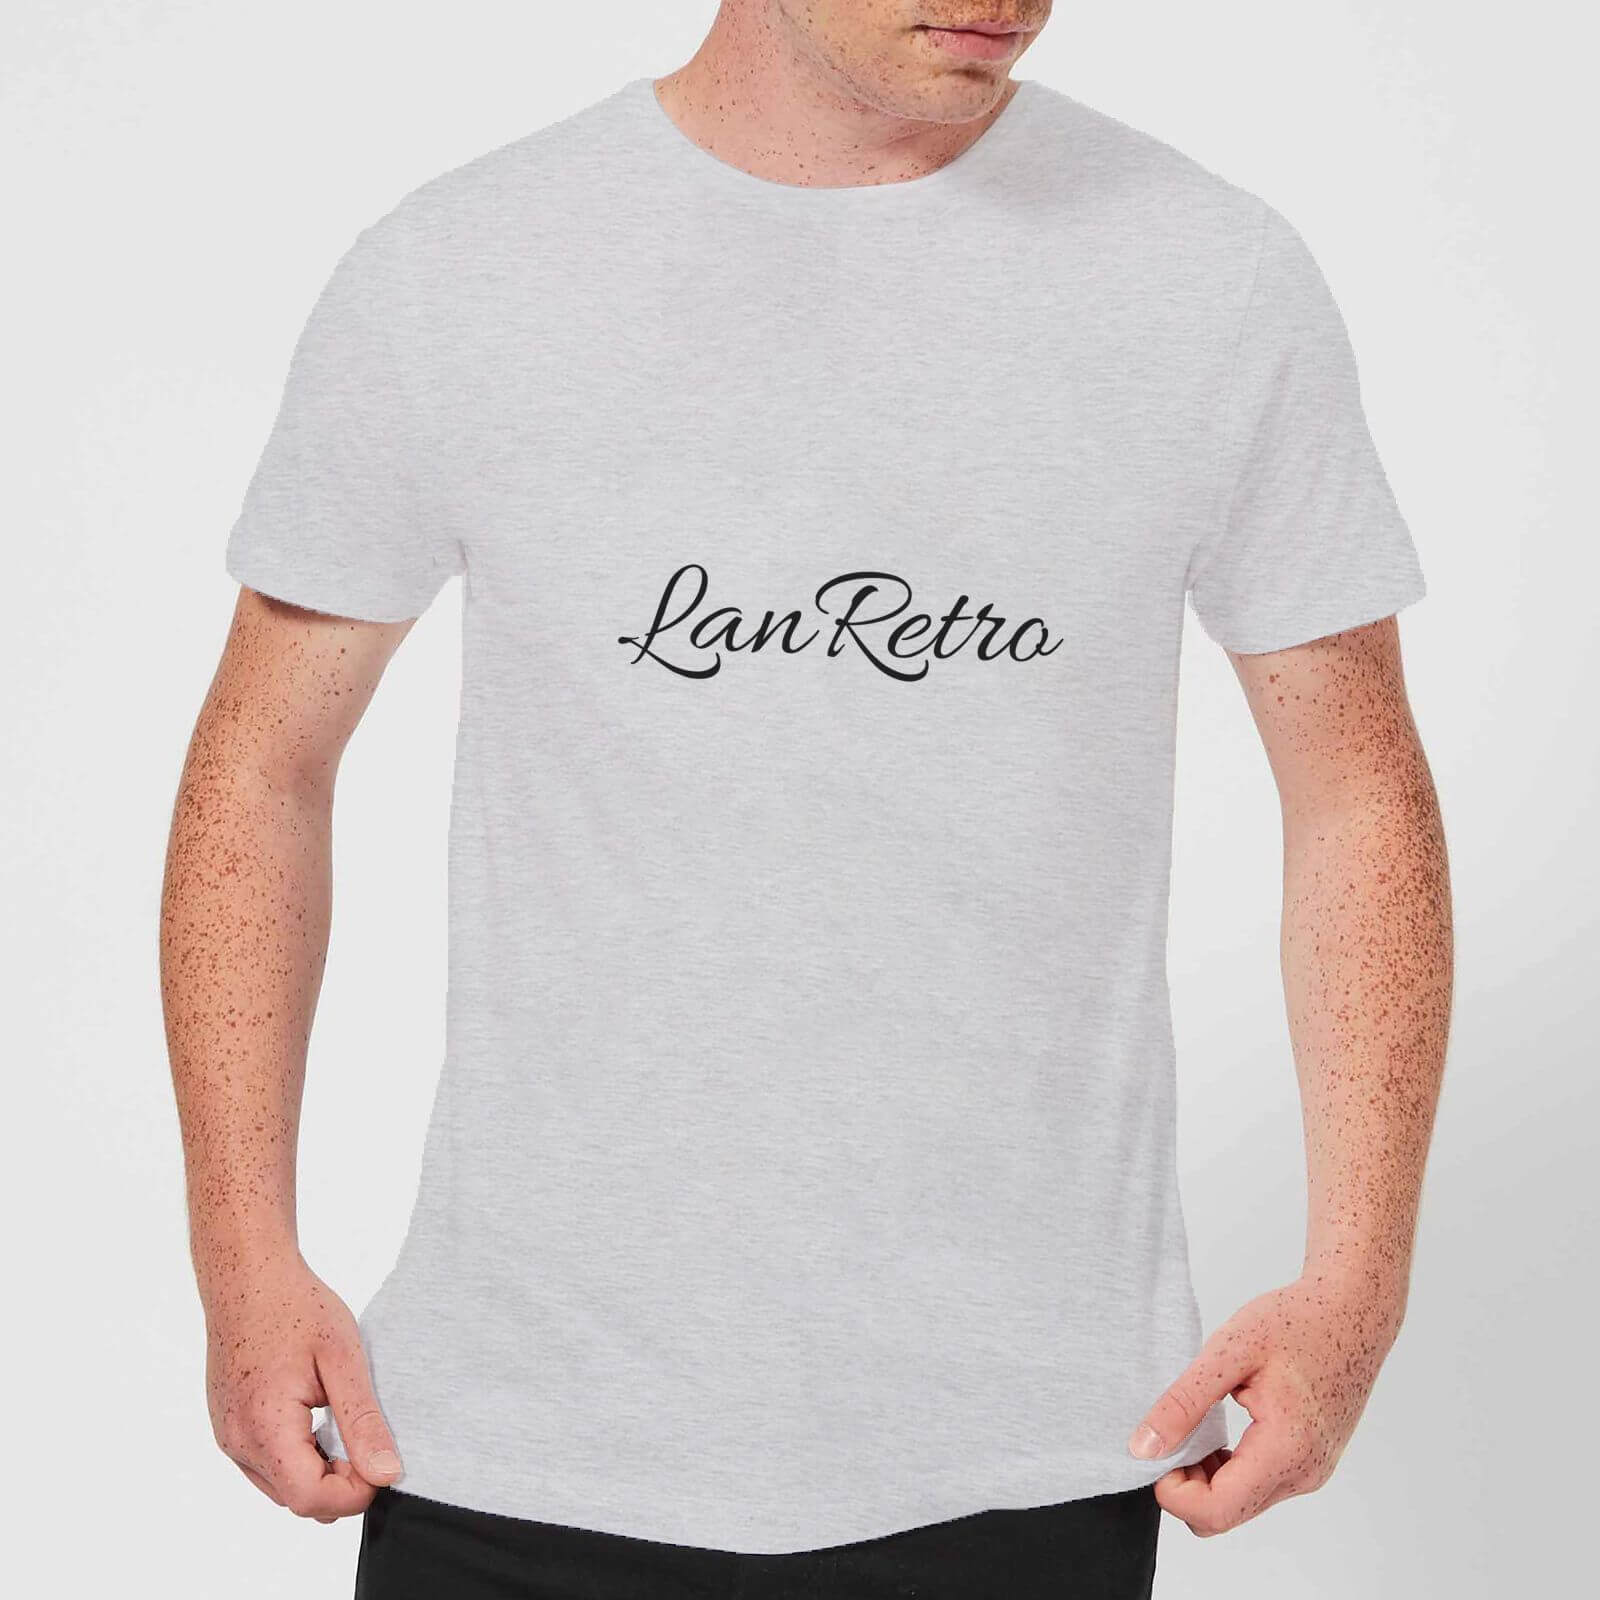 Lanre Retro Lanretro Dark Men's T-Shirt - Grey - XL - Grey